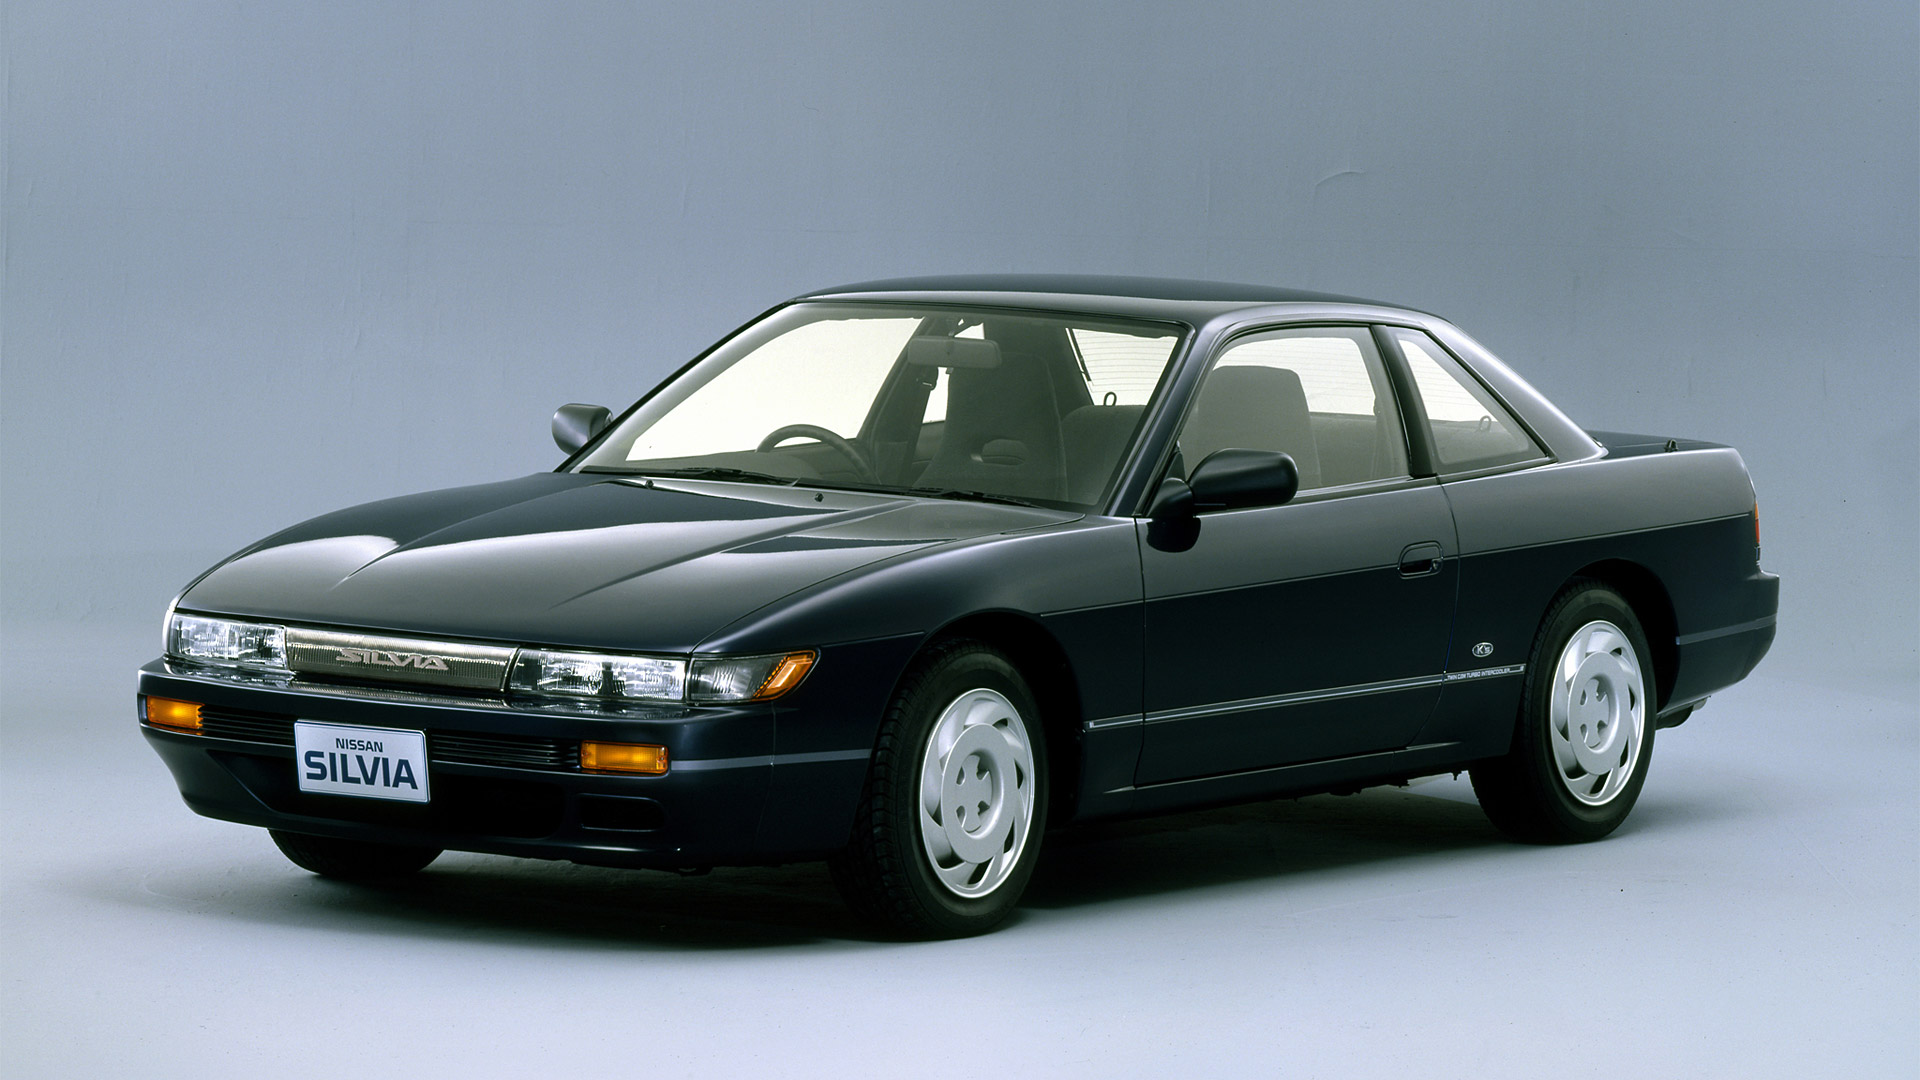  1988 Nissan Silvia Wallpaper.